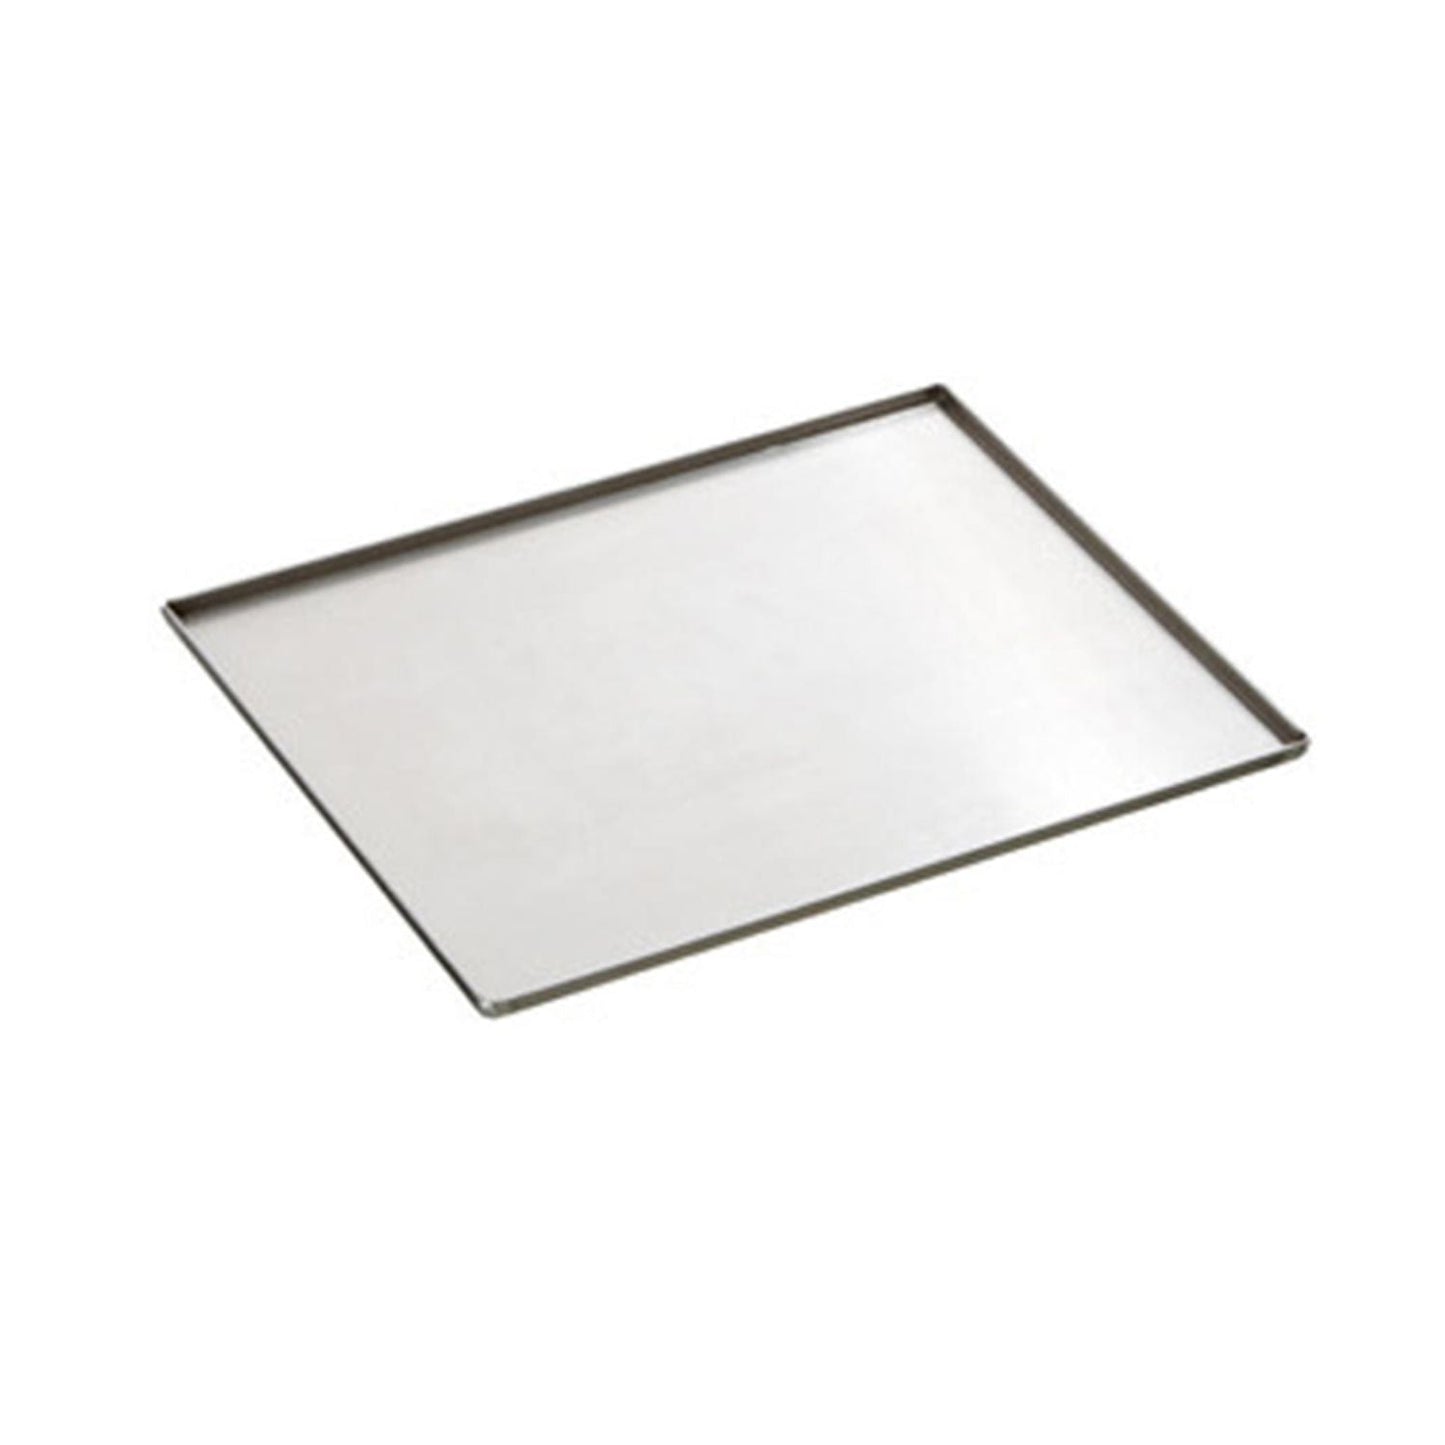 1 mm Stainless Steel Baking Tray - 600 x 400 x 25 mm - Medium